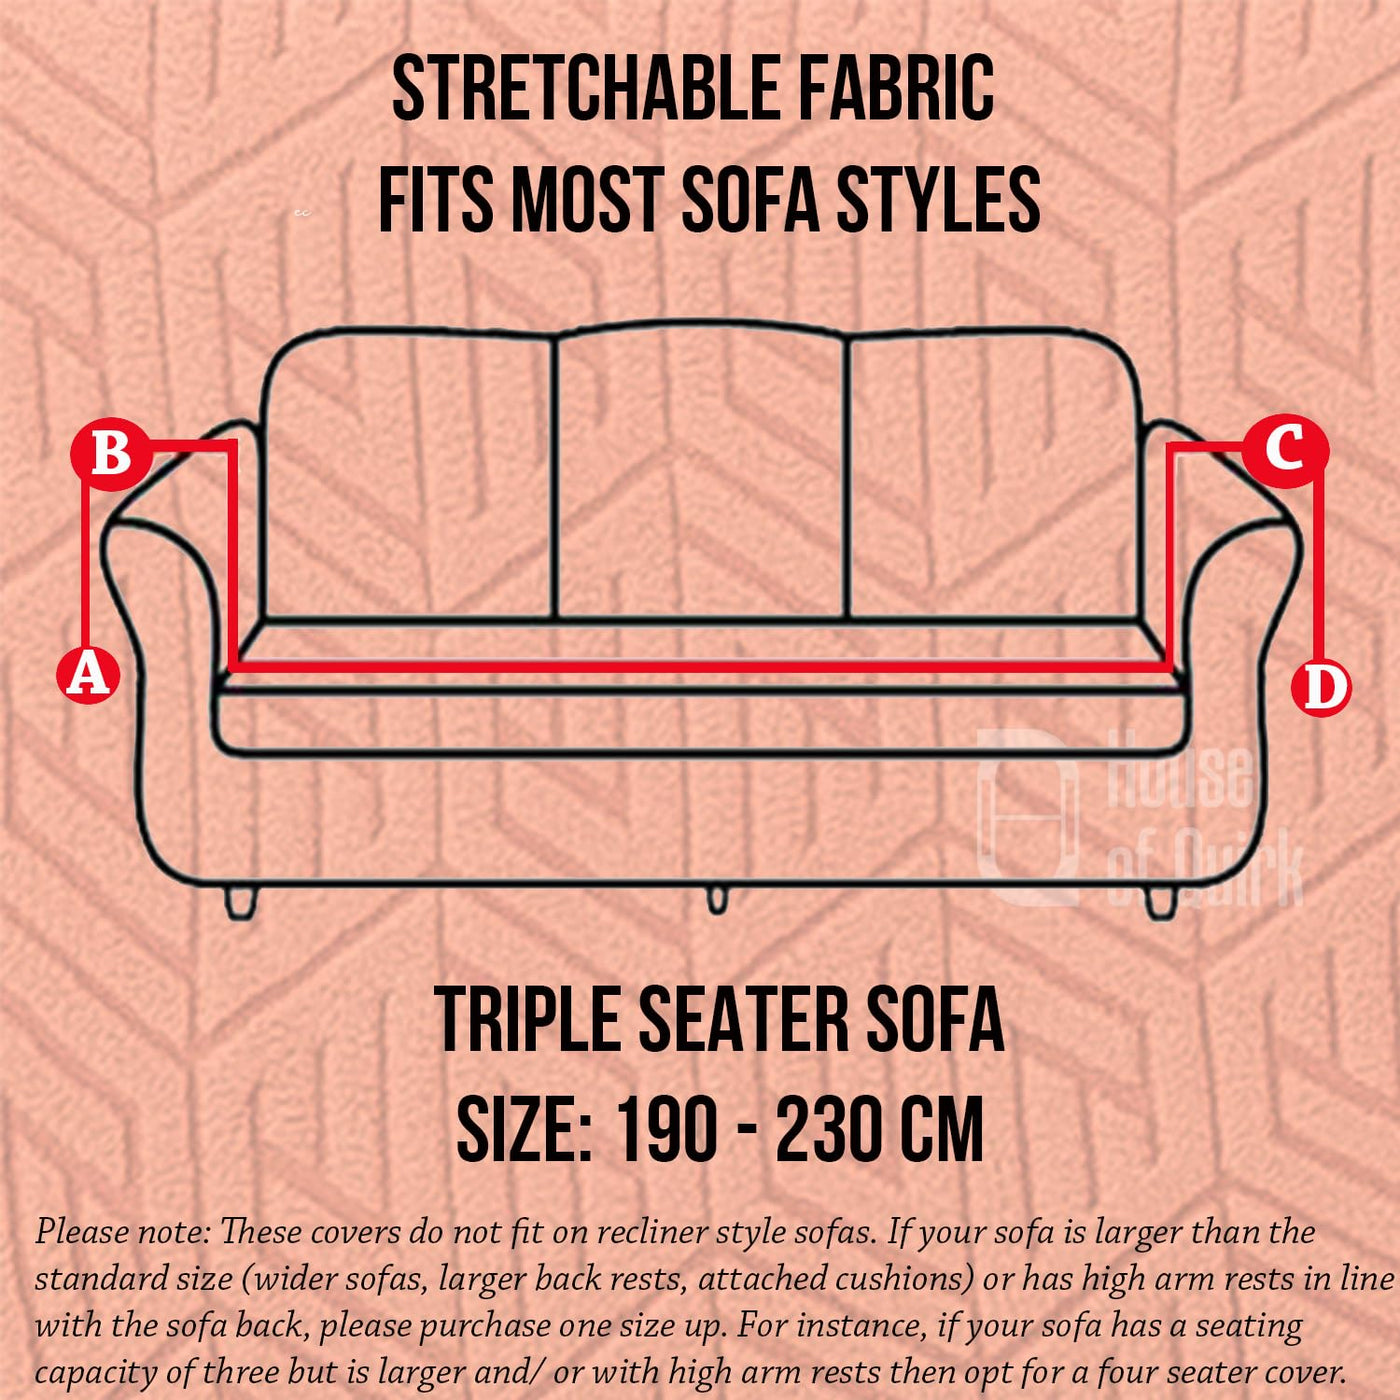 Universal Jacquard Grain Texture Fabric Sofa-Orange